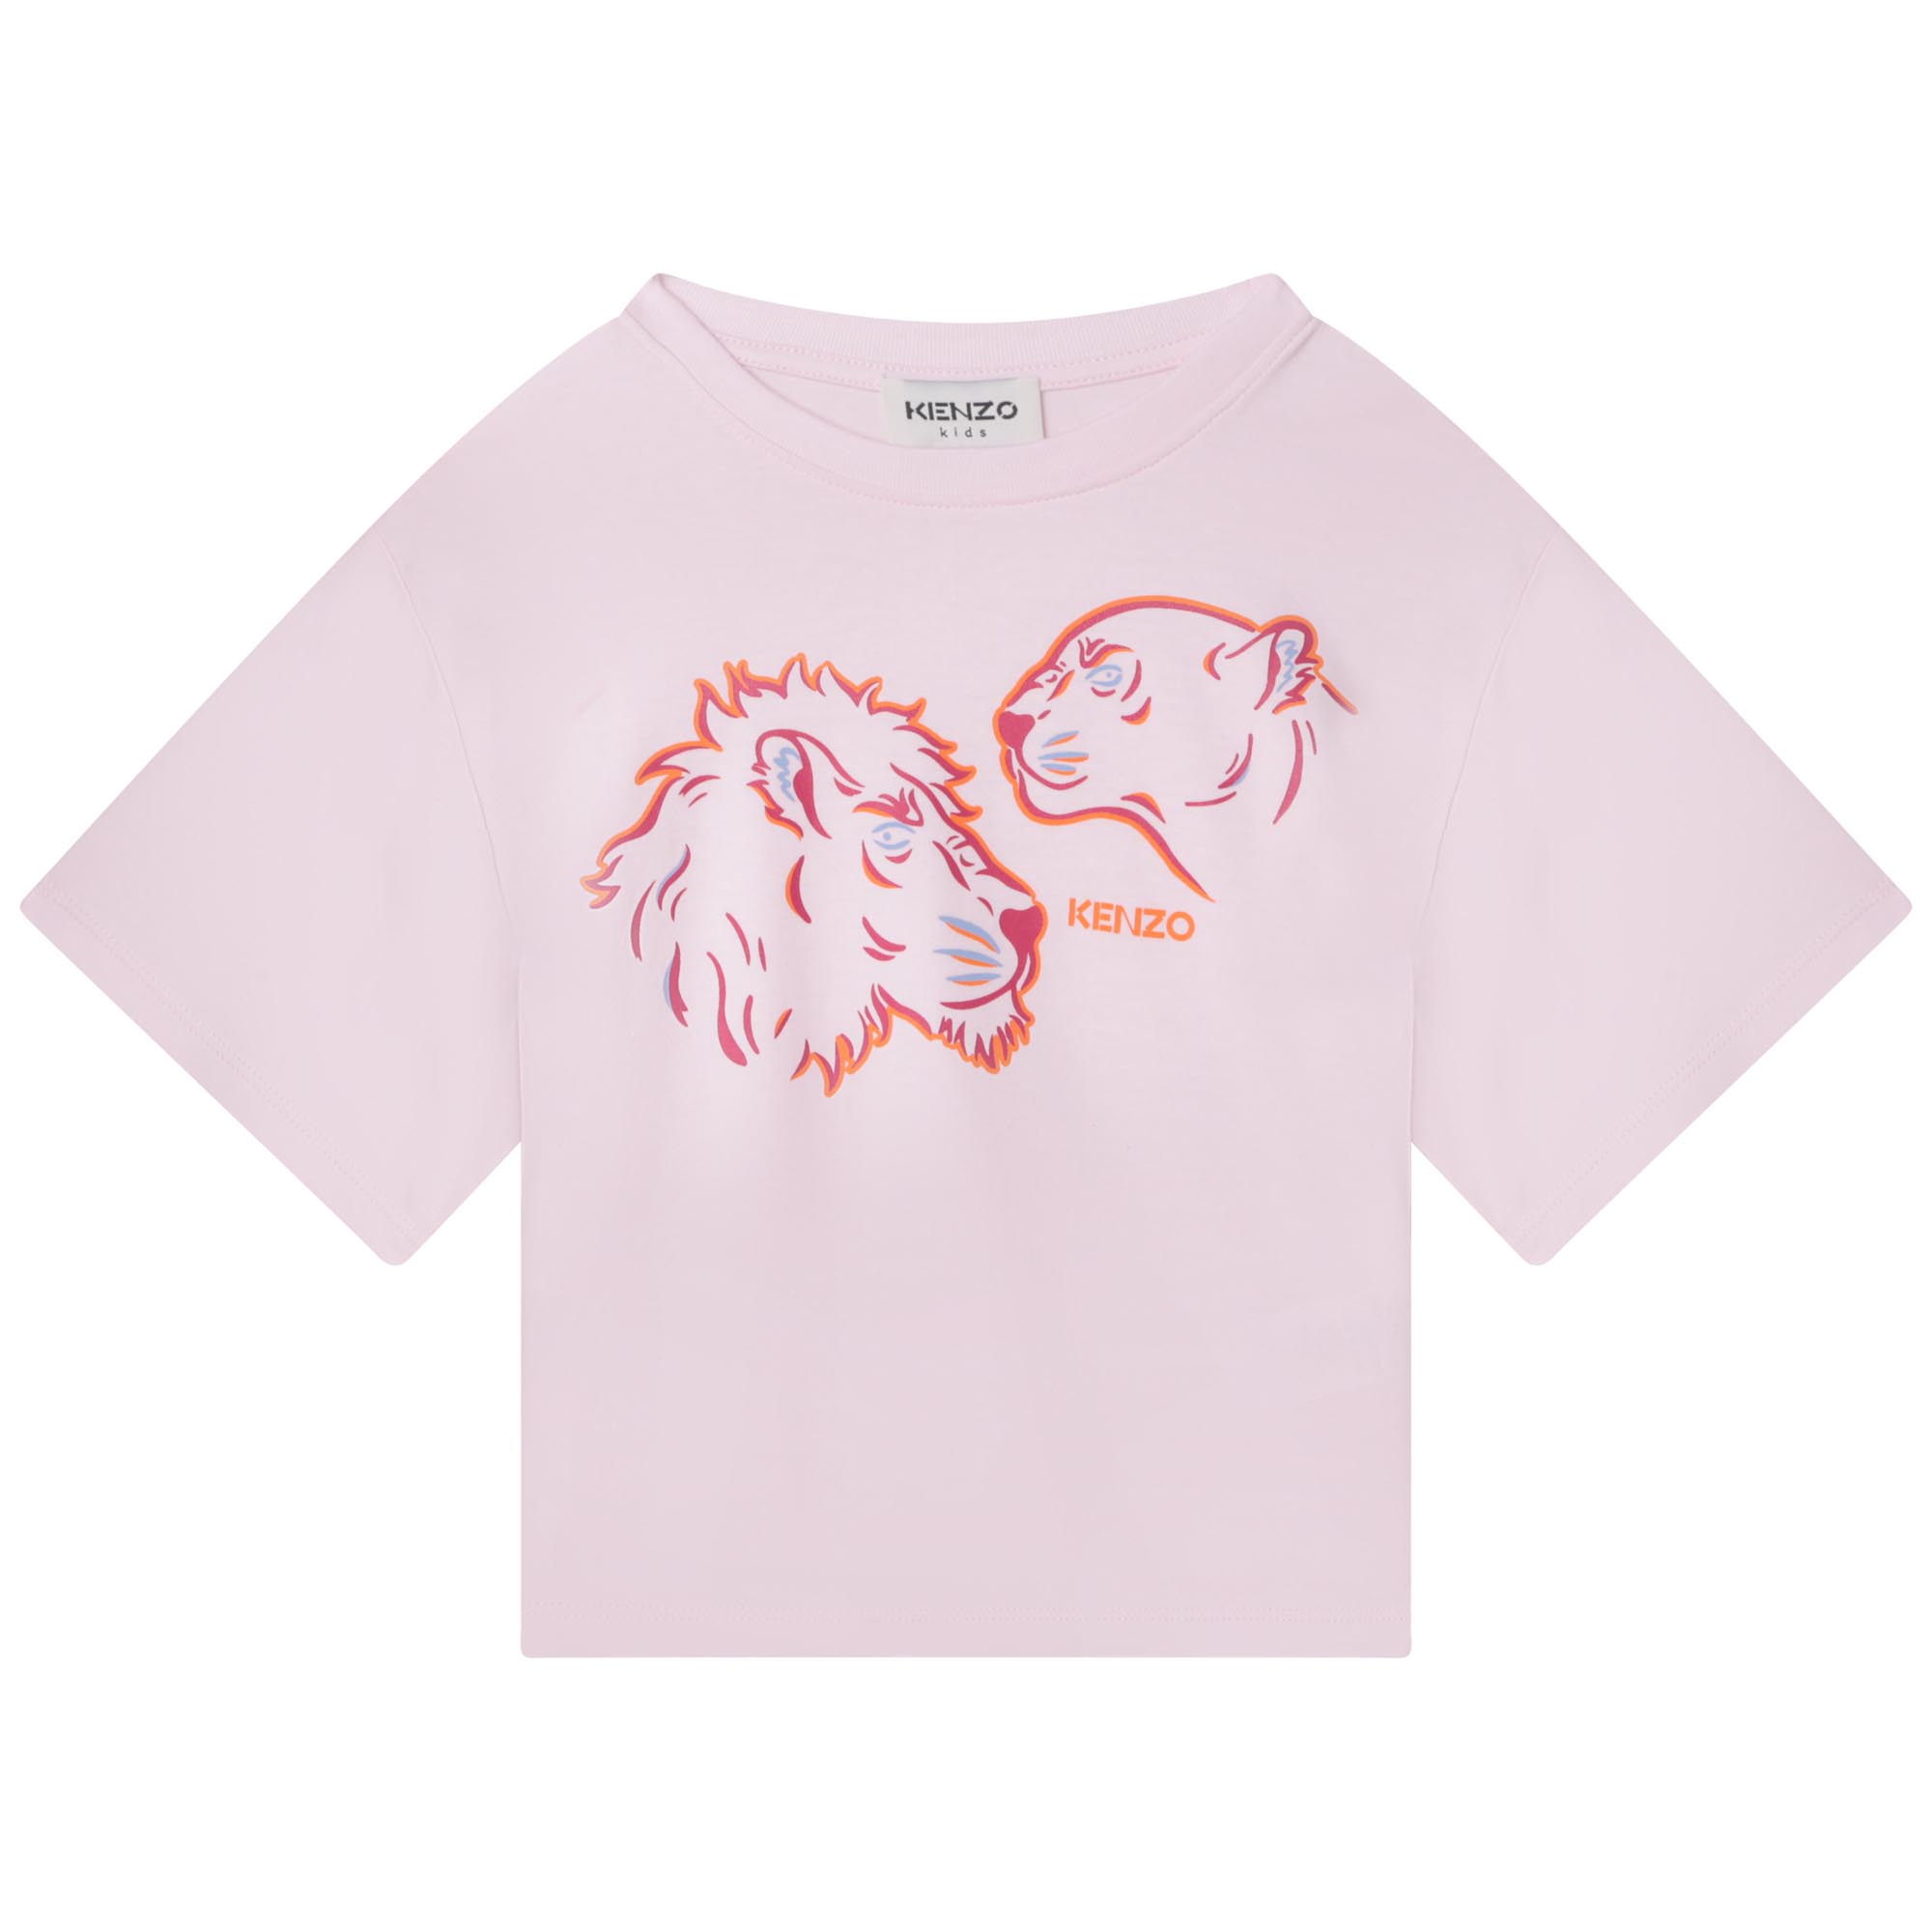 KENZO KIDS Bedrukt T-shirt ronde hals meisje roze around